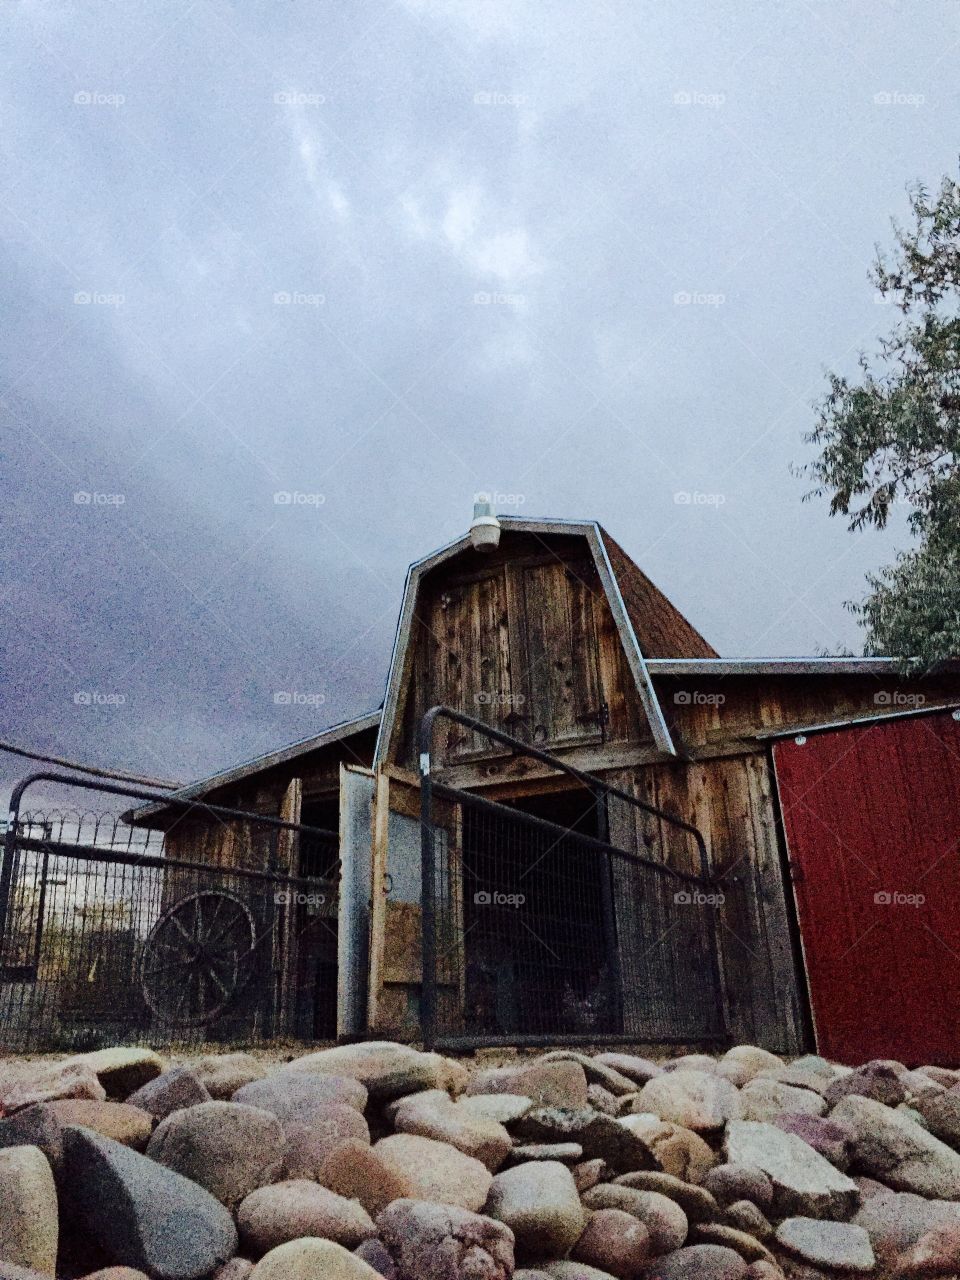 Rain's a Comin'. Storm clouds build over a rustic barn